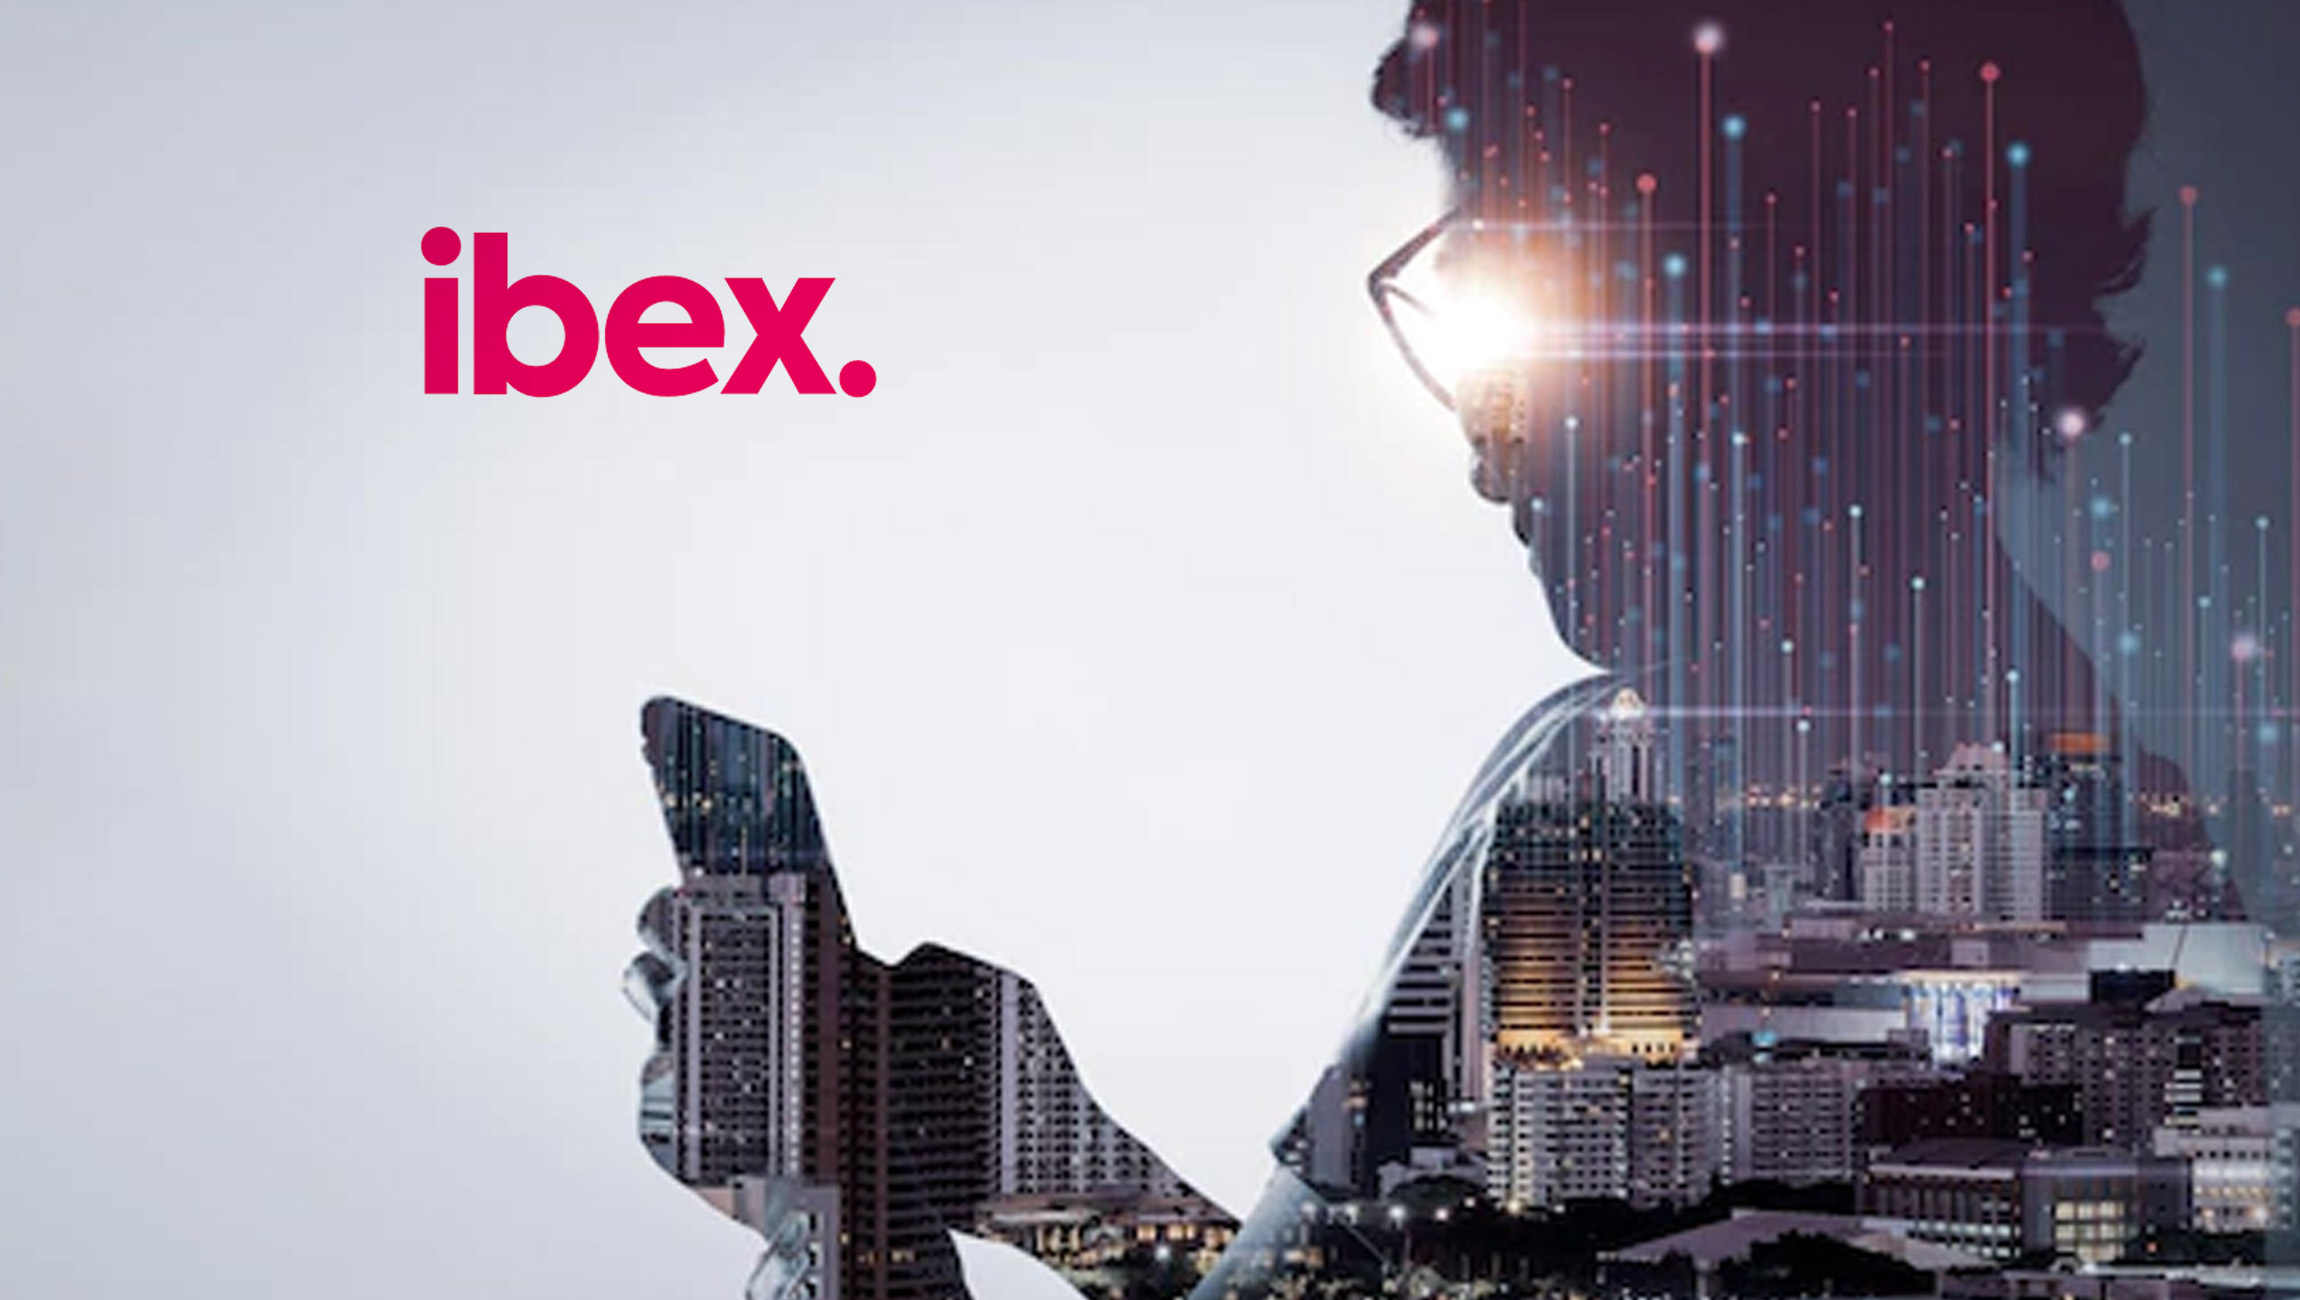 ibex to Sponsor Customer Contact Week Nashville 2022